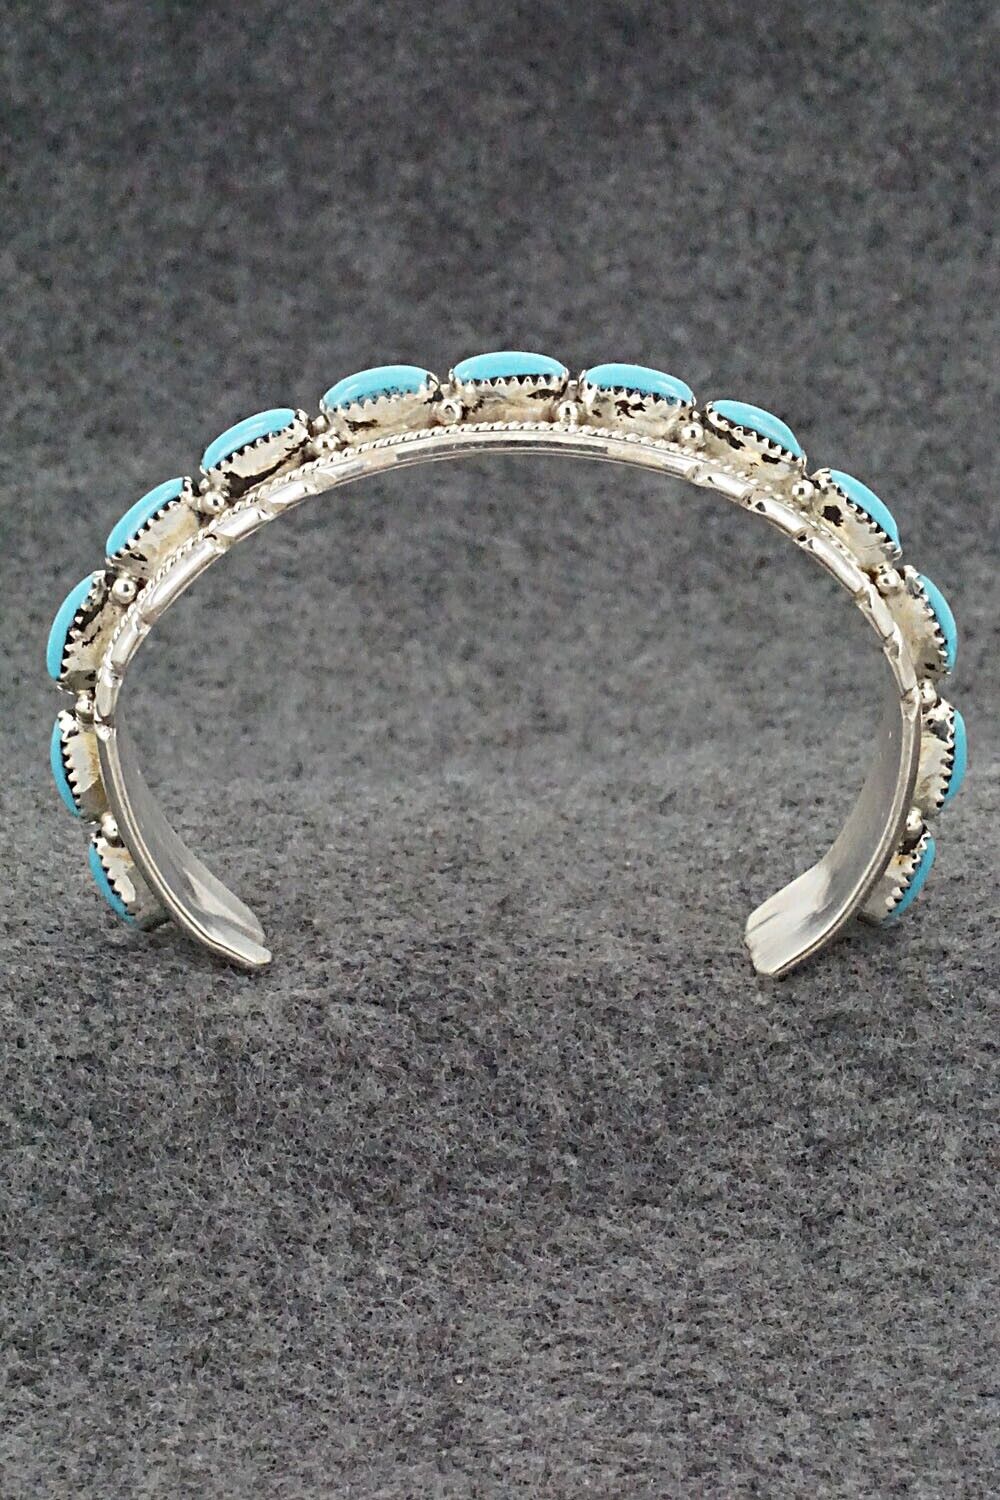 Turquoise & Sterling Silver Bracelet - Leland Kaamasee